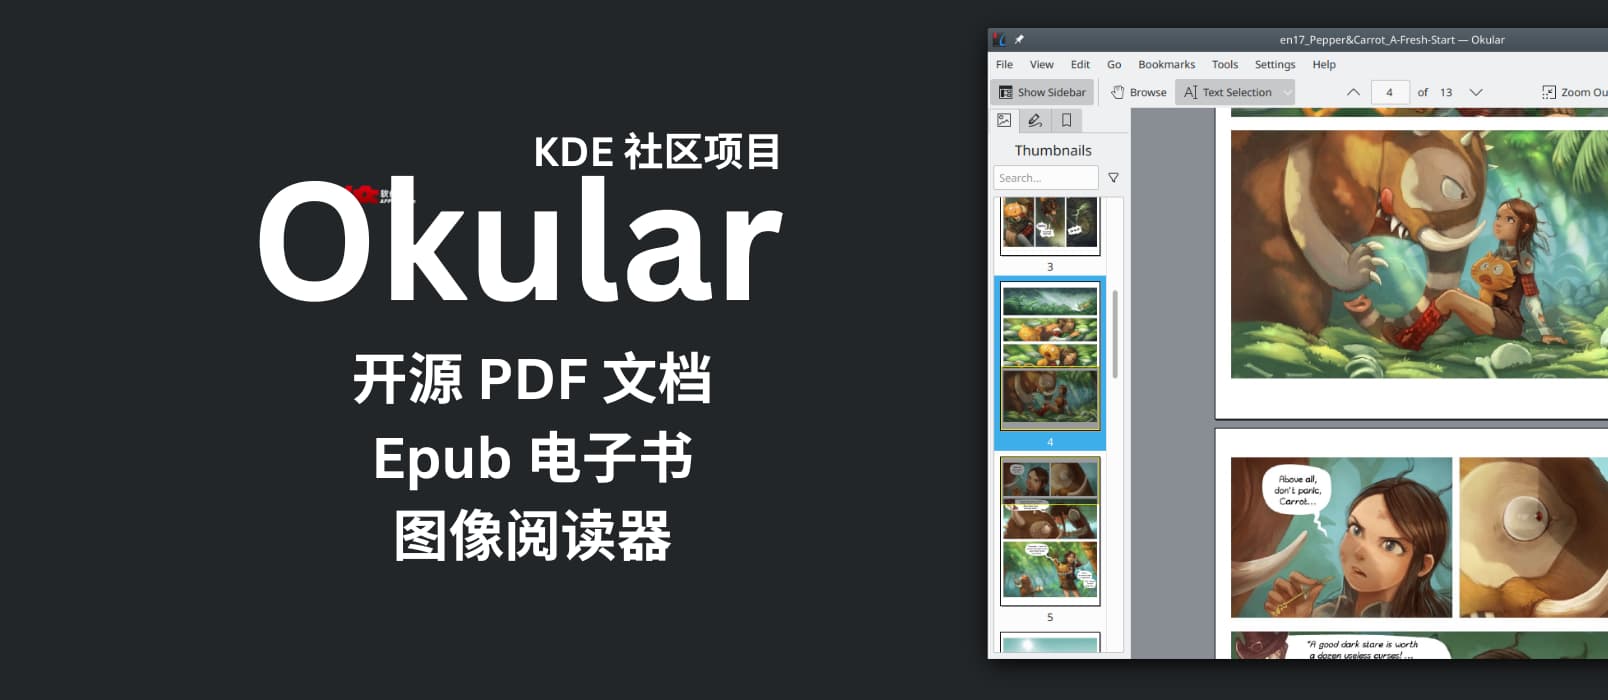 Okular -  开源 PDF 文档、Epub 电子书，图像阅读器[Windows/Linux] 